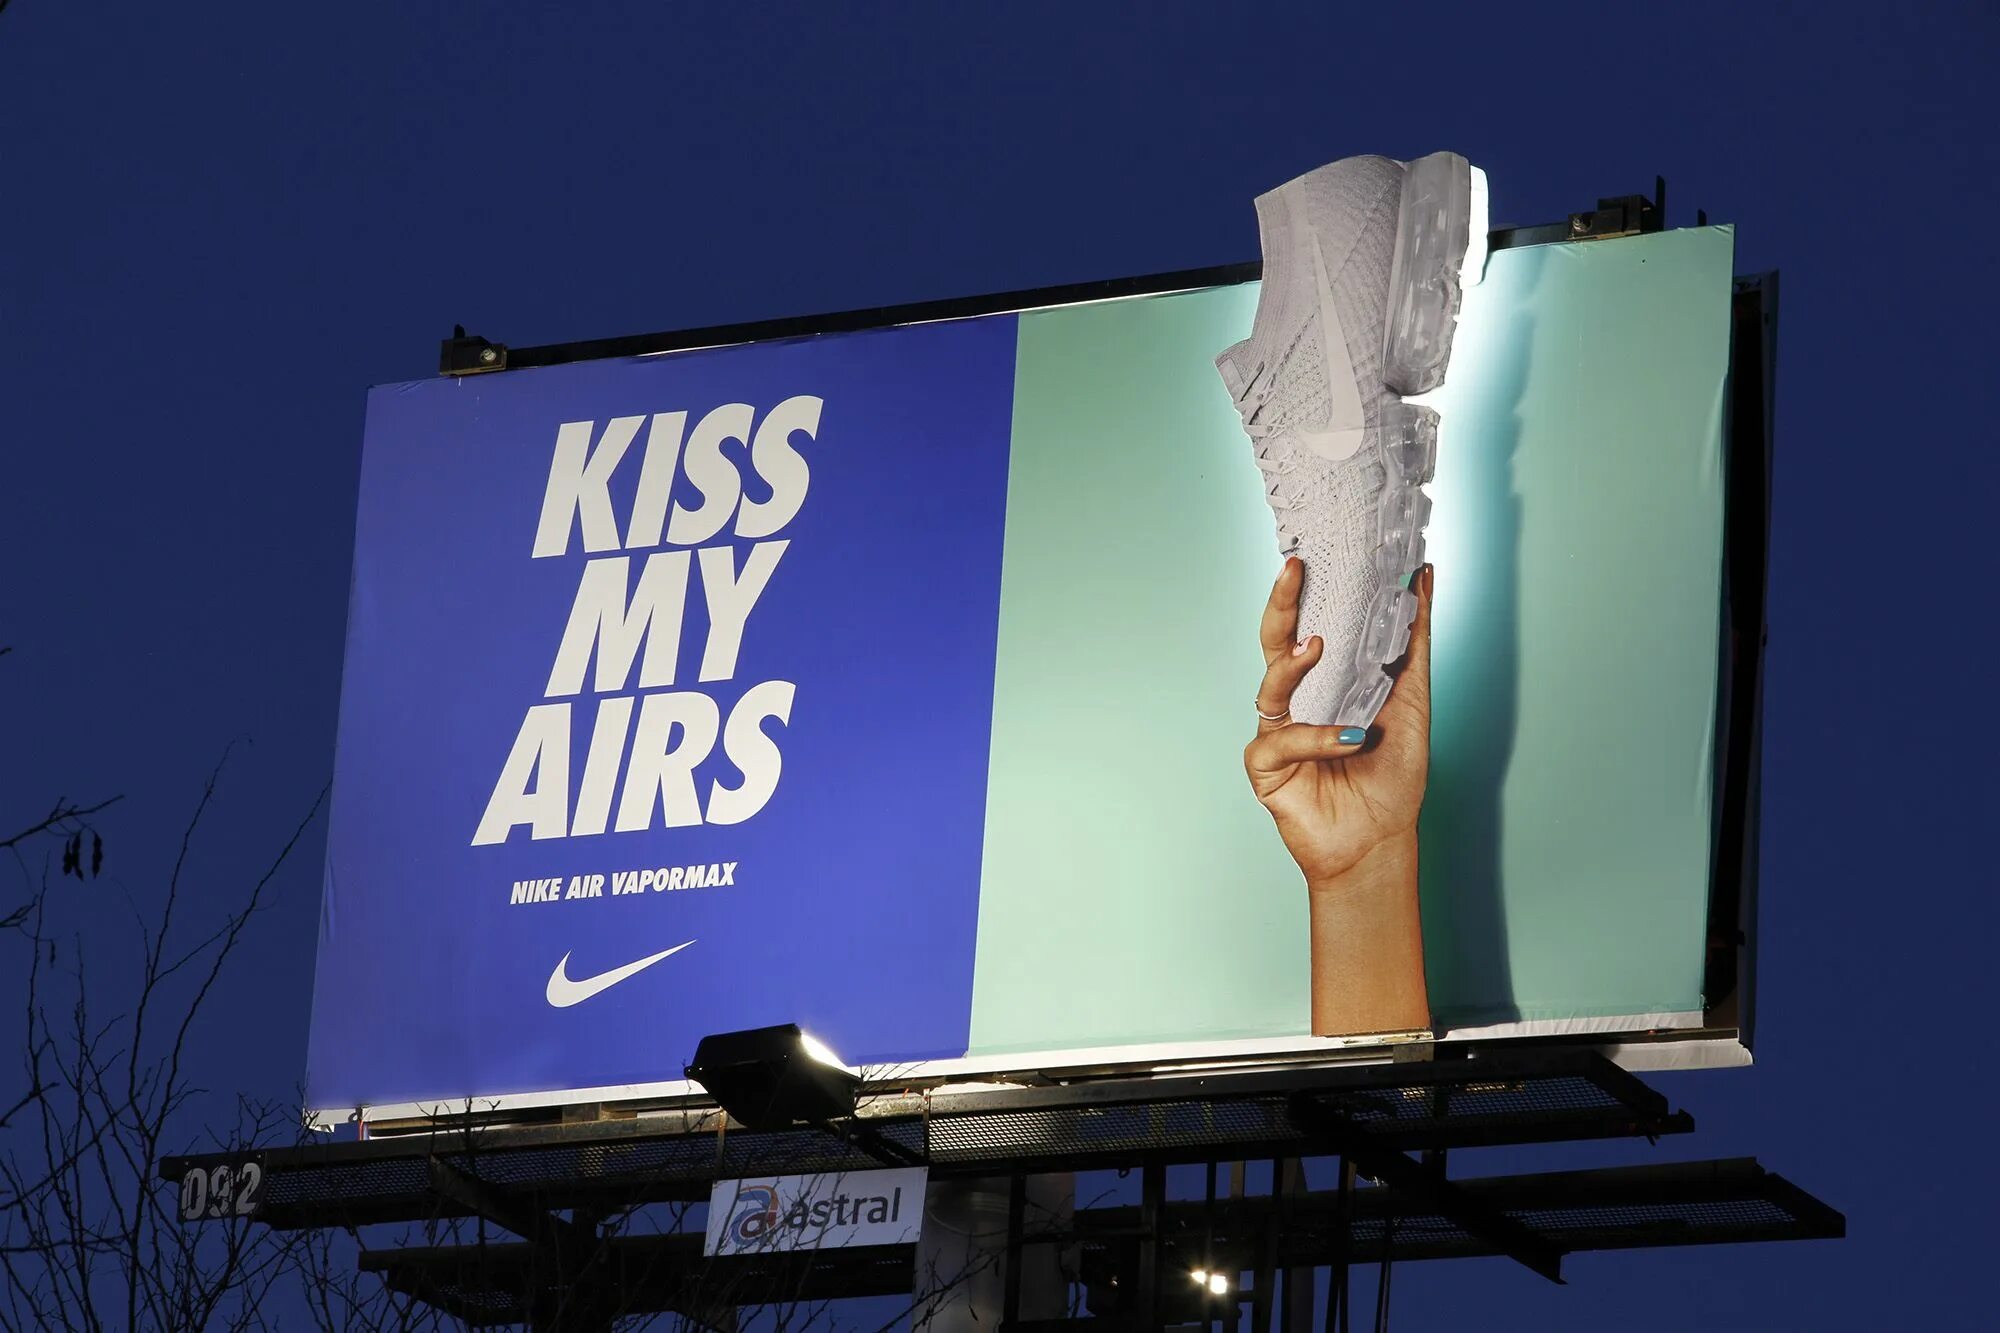 I am in advertising. Билборд Nike 2022. Рекламный баннер. Креативные баннеры. Креативная реклама баннер.